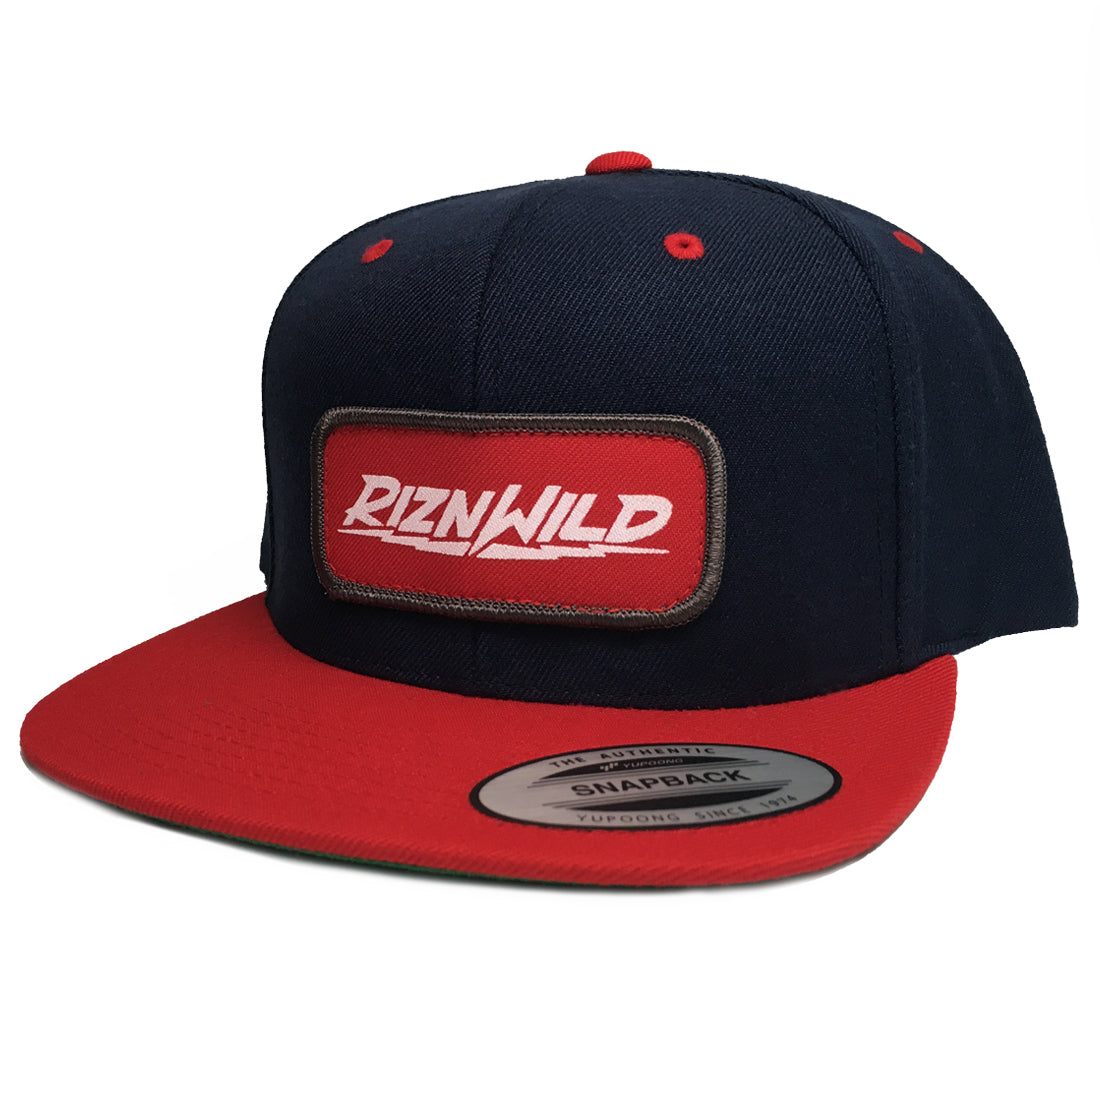 Flex in – Snapback RIZNWILD Flexfit Navy-Red hat